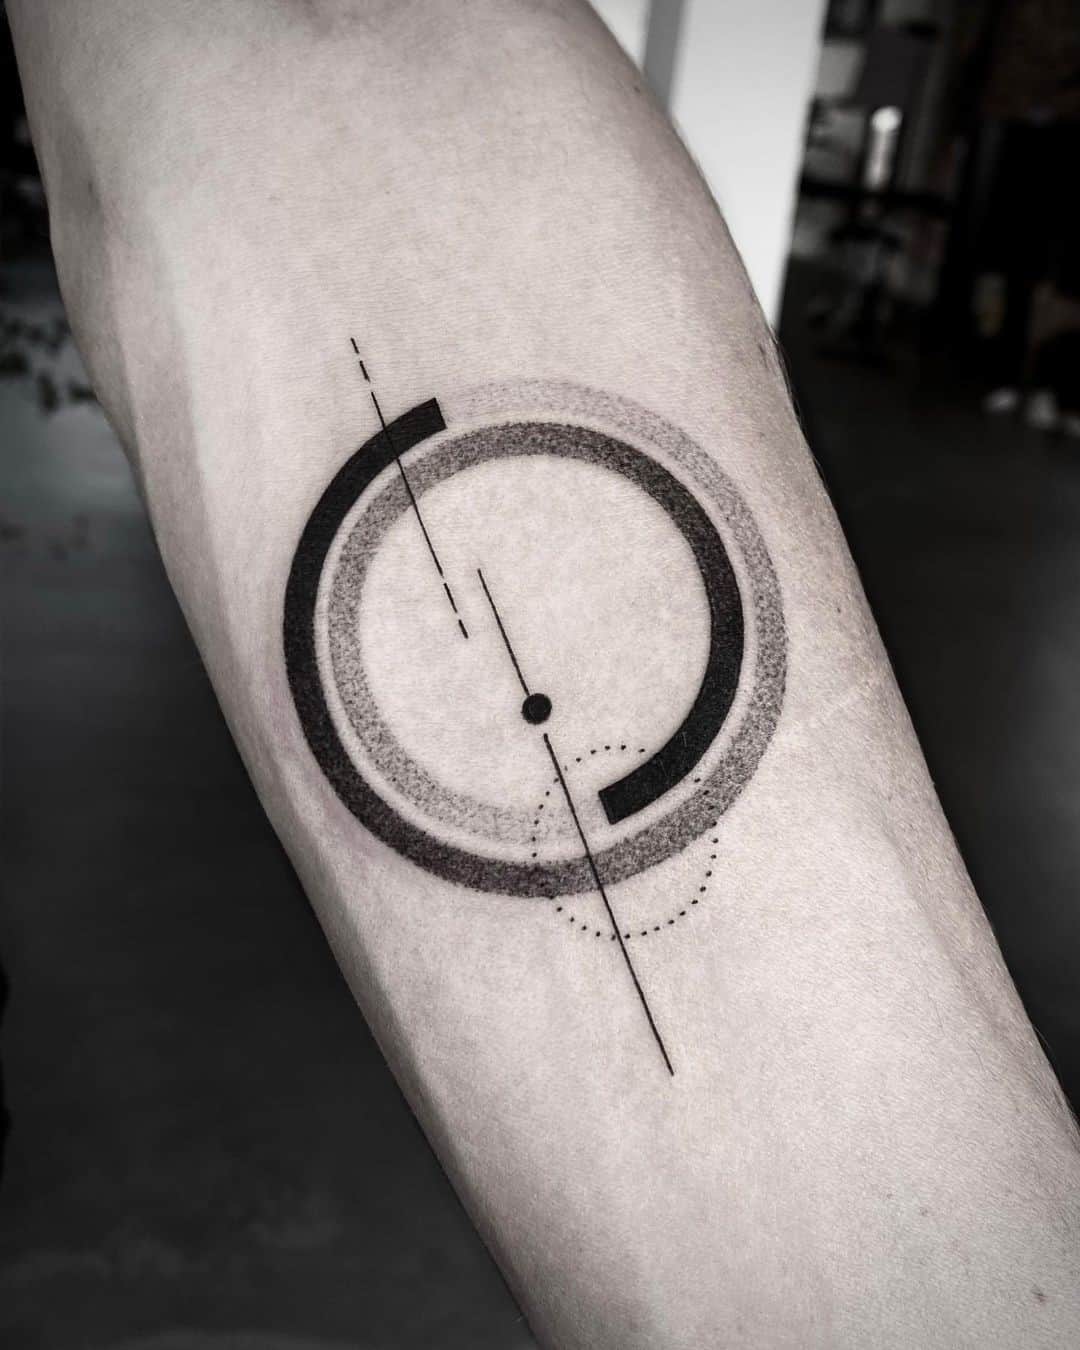 Detailed Circle Tattoo Design